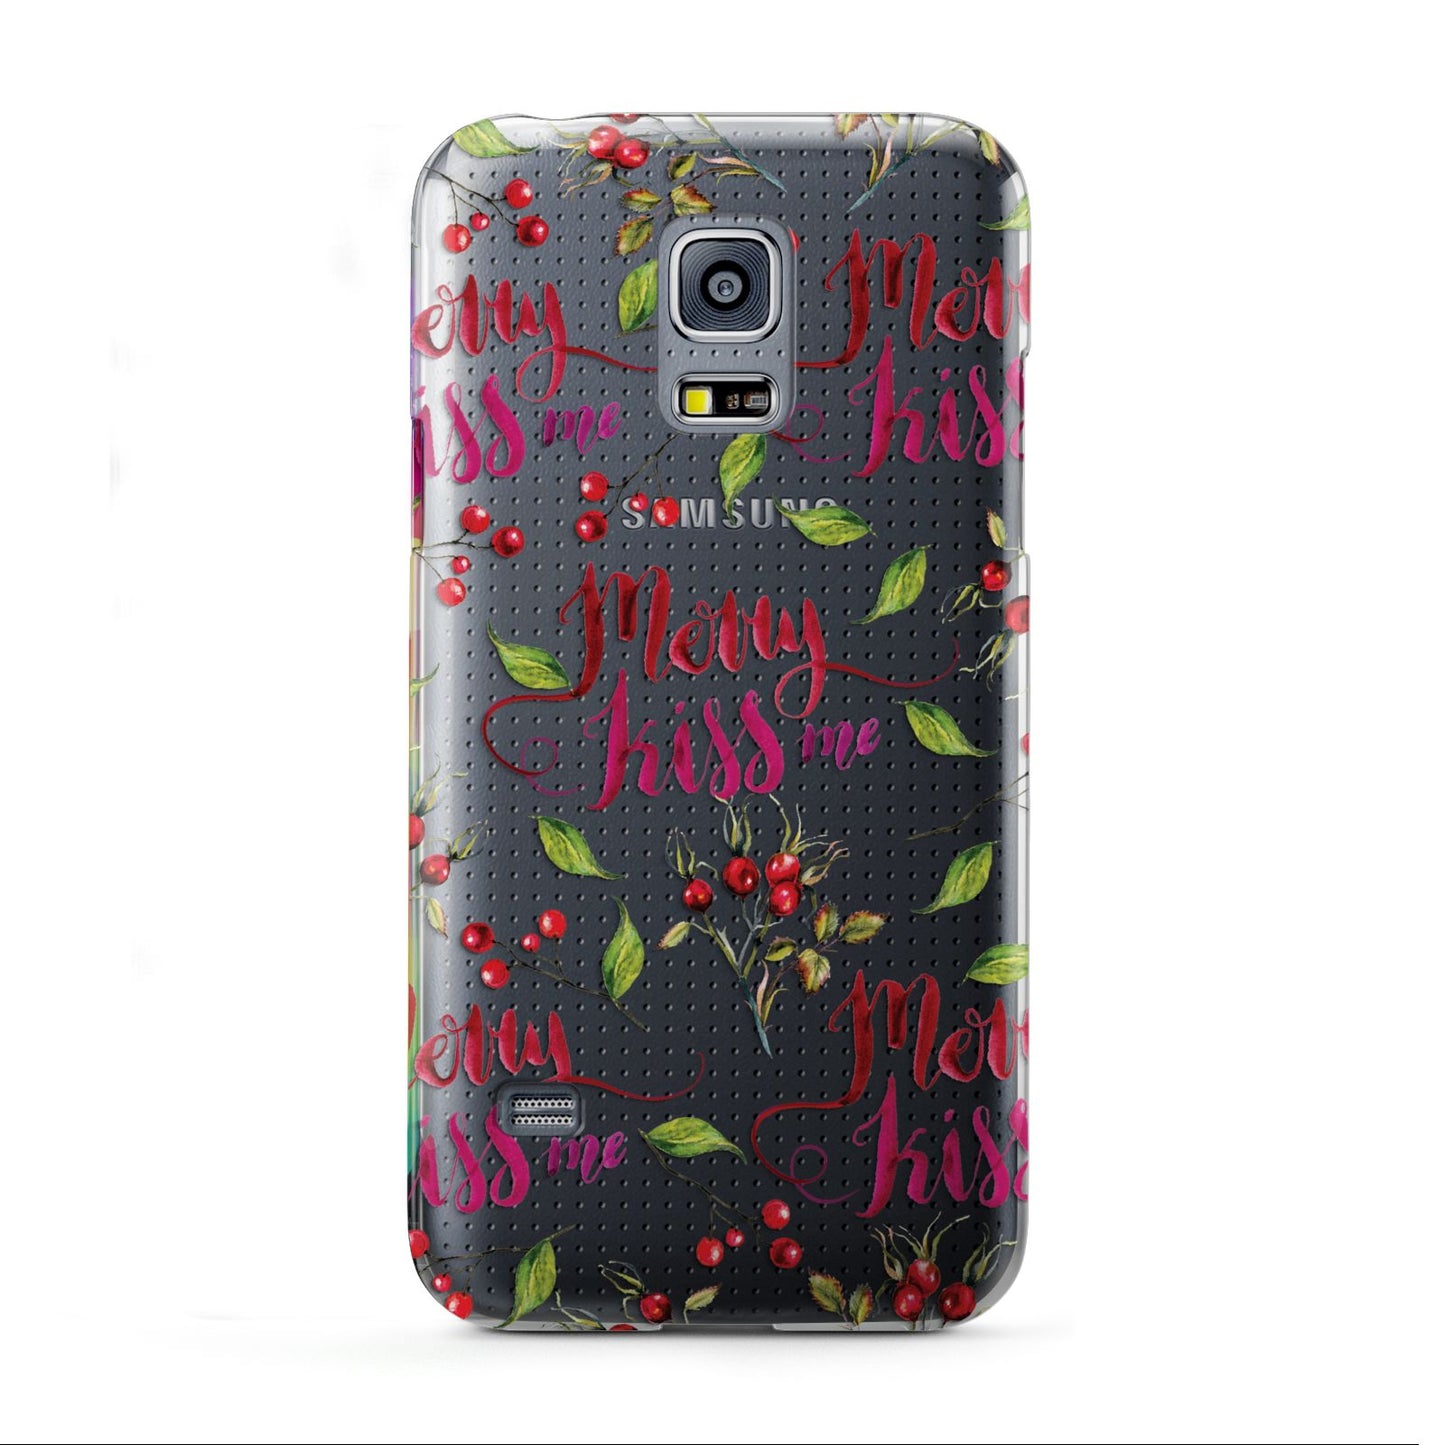 Merry kiss me Samsung Galaxy S5 Mini Case